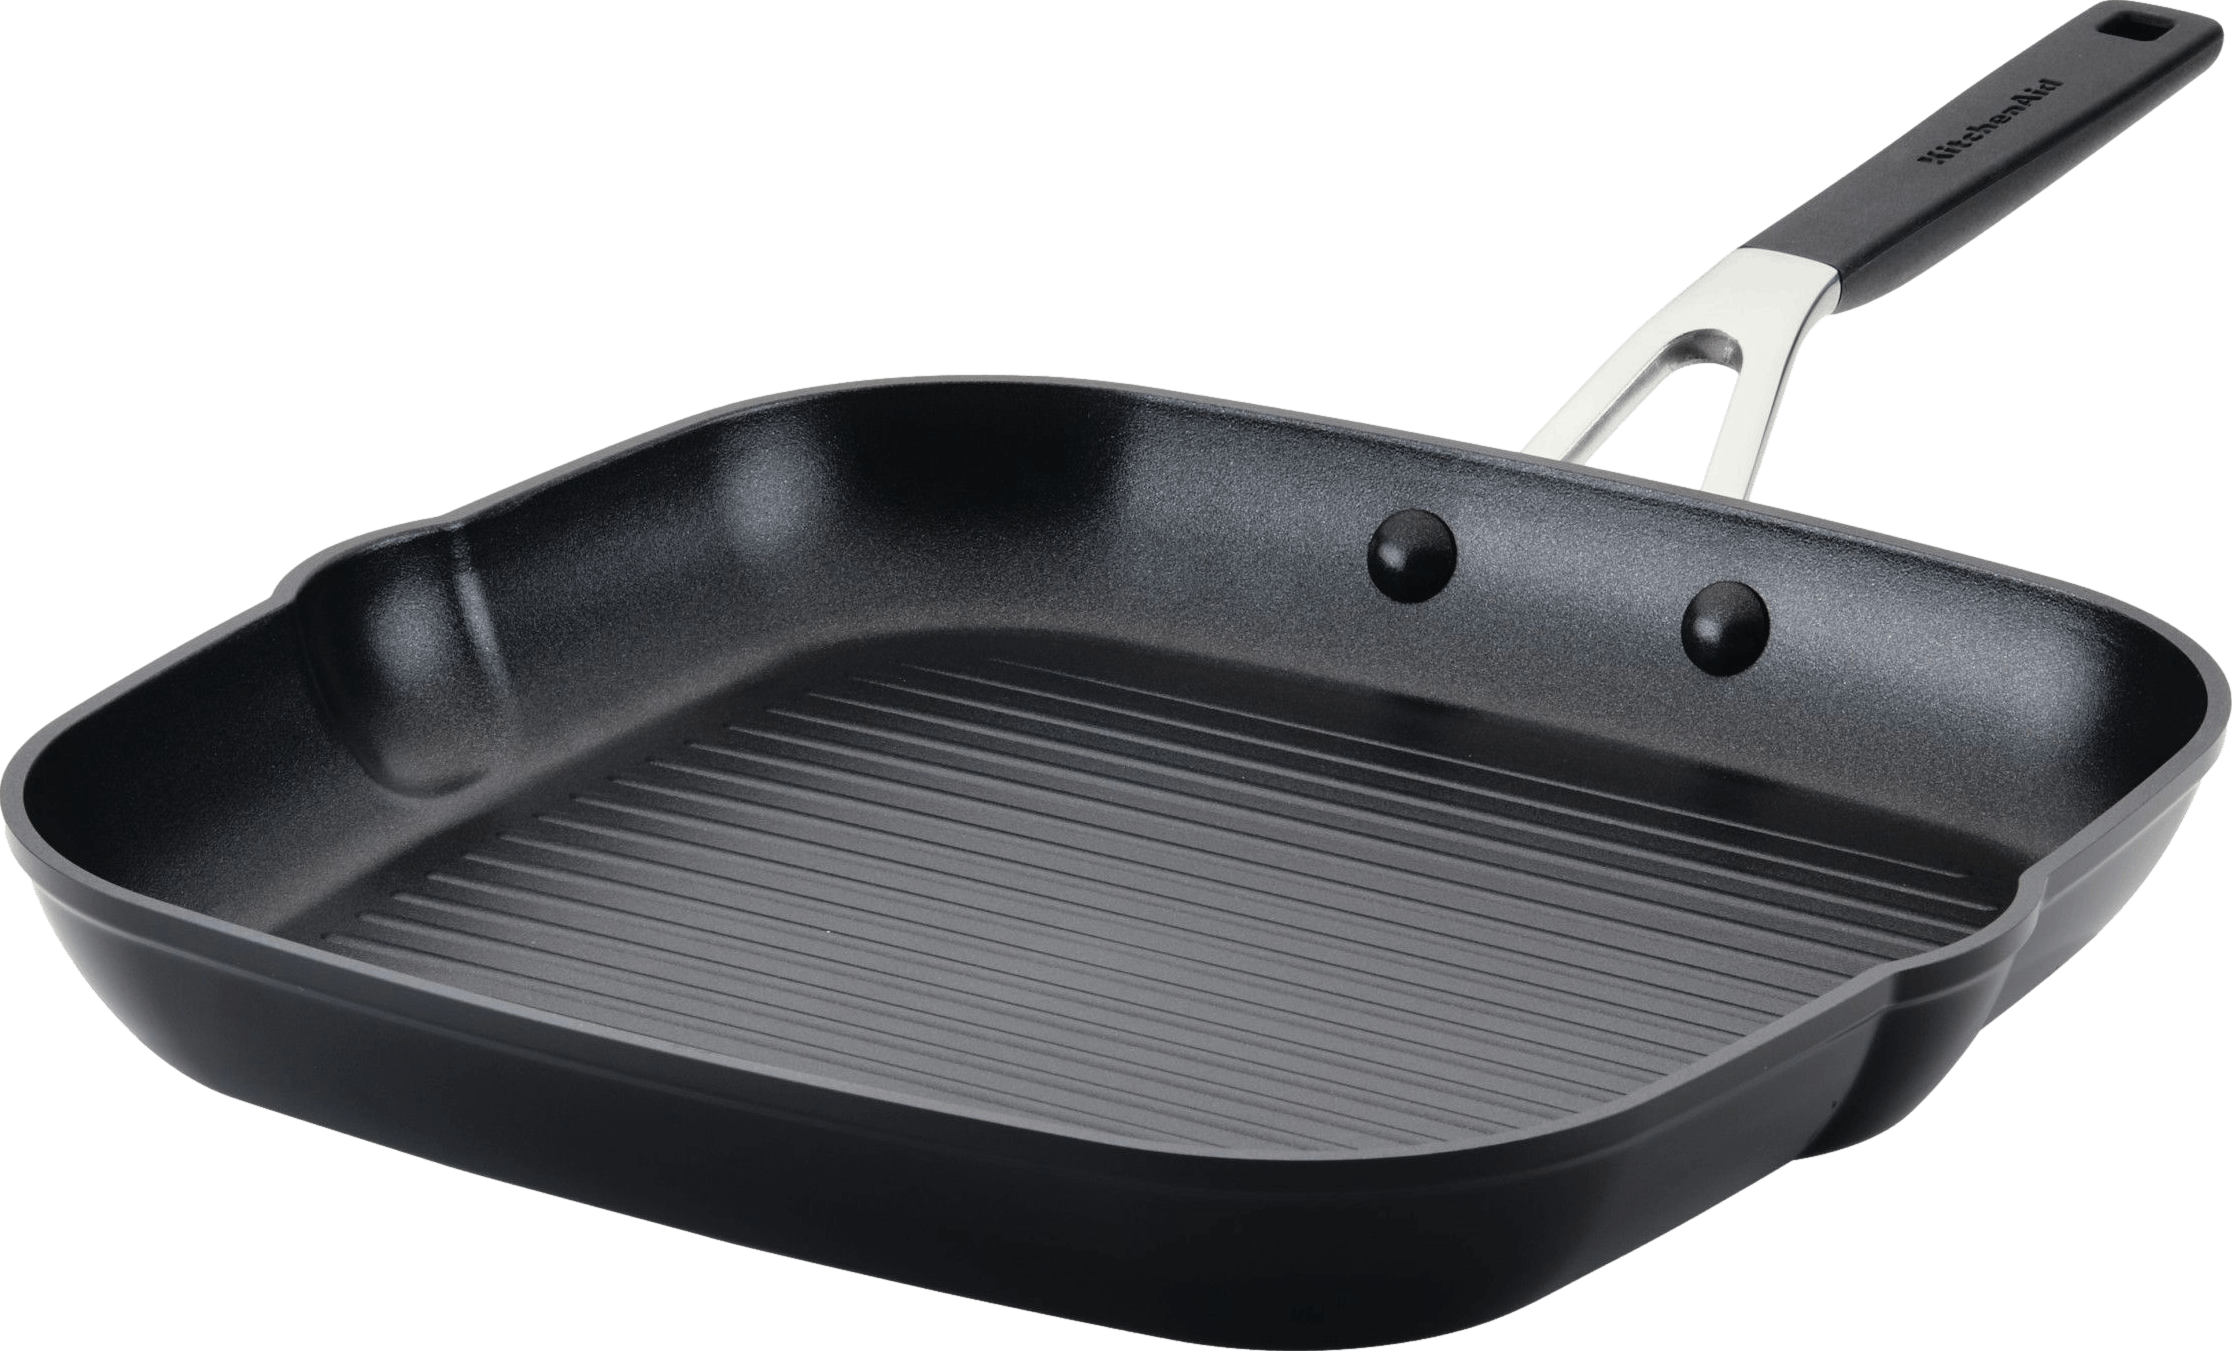 KitchenAid Hard Anodized Square Grill Pan, 11.25-Inch, Onyx Black